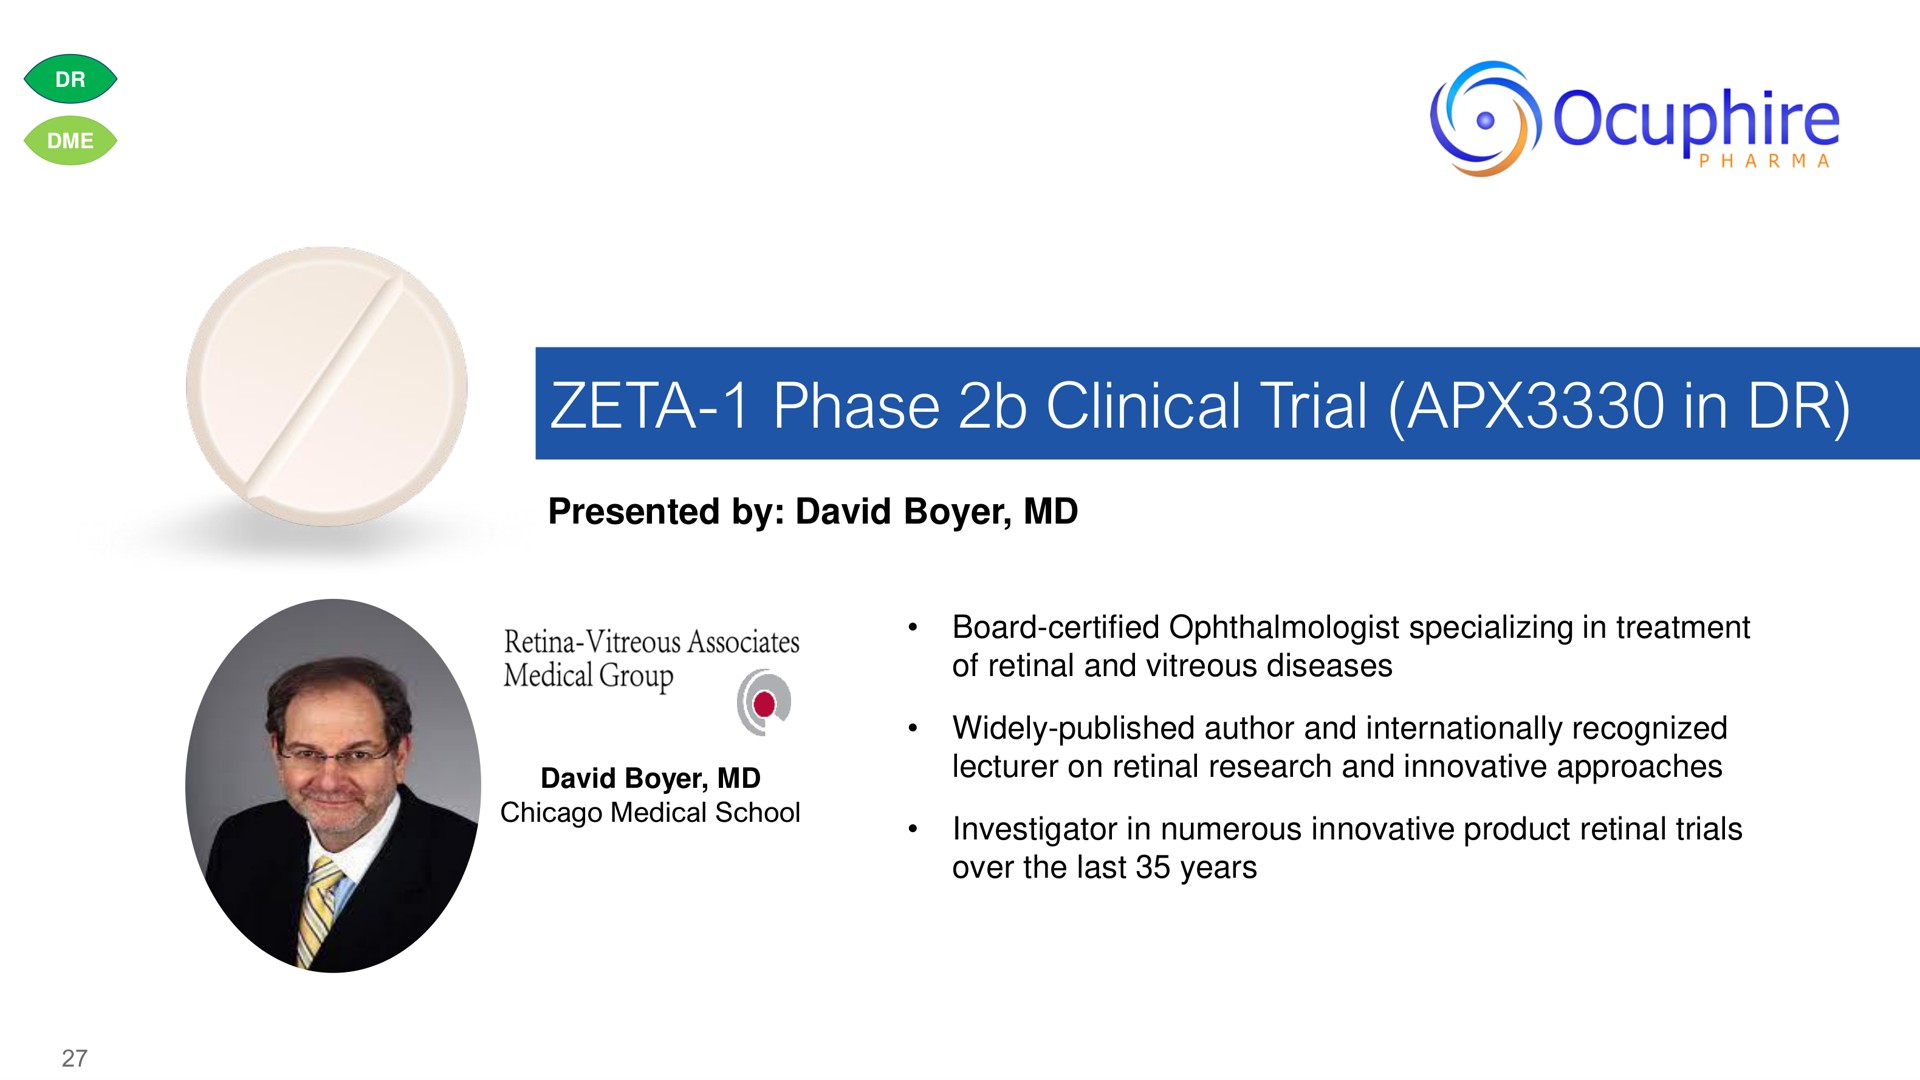 zeta phase clinical trial in | Ocuphire Pharma